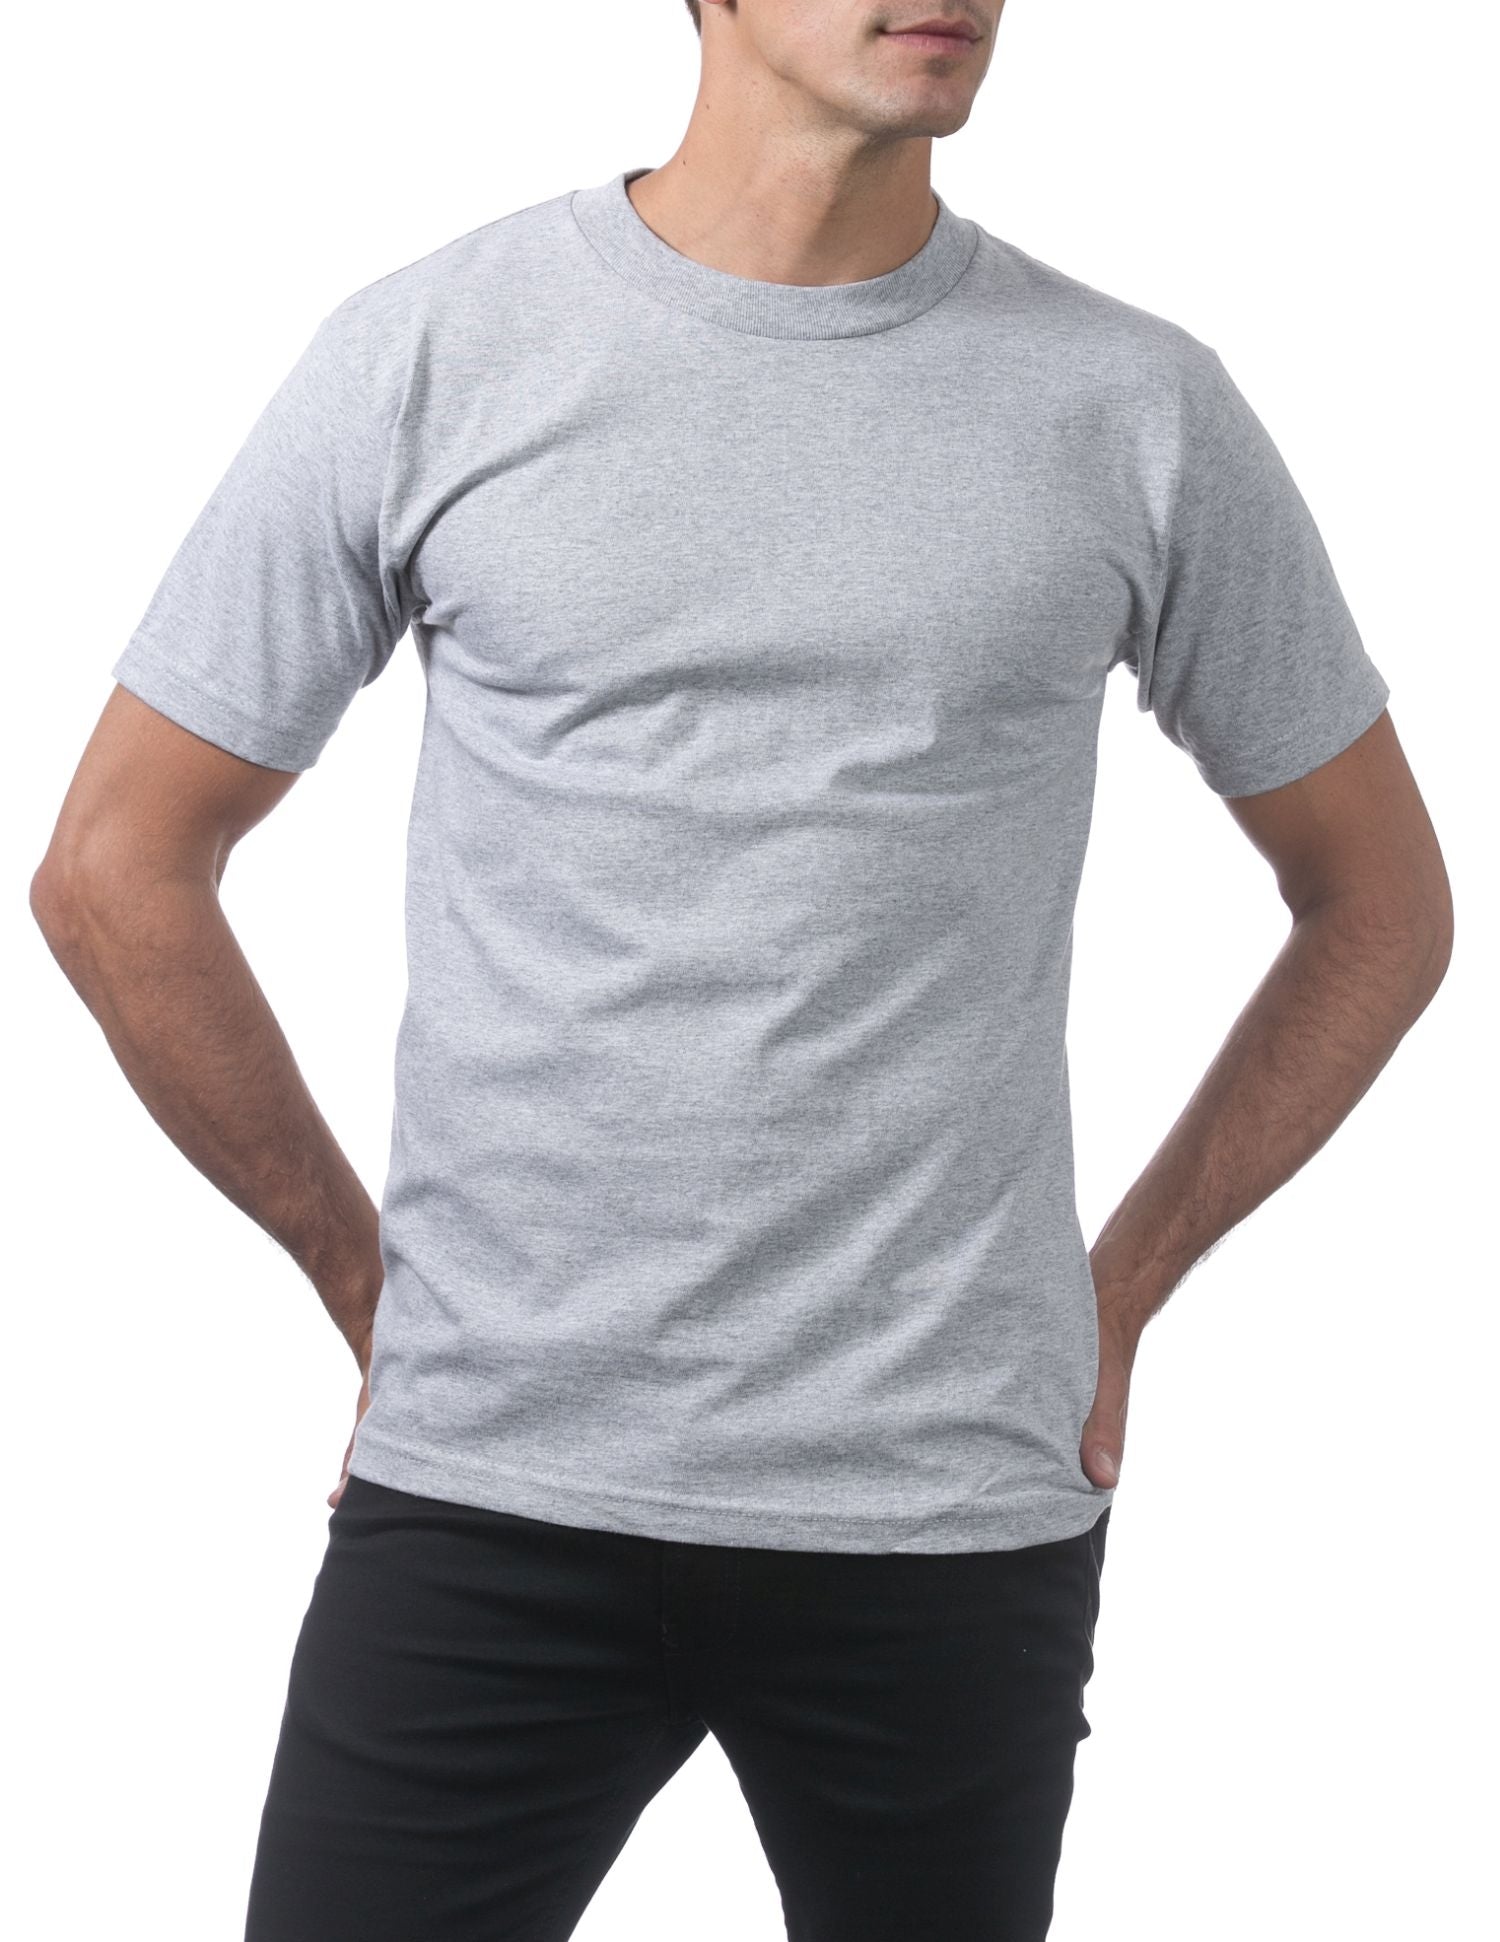 Pro Club Men's Comfort Cotton Short Sleeve T-Shirt - Heather Gray - Large - Pro-Distributing